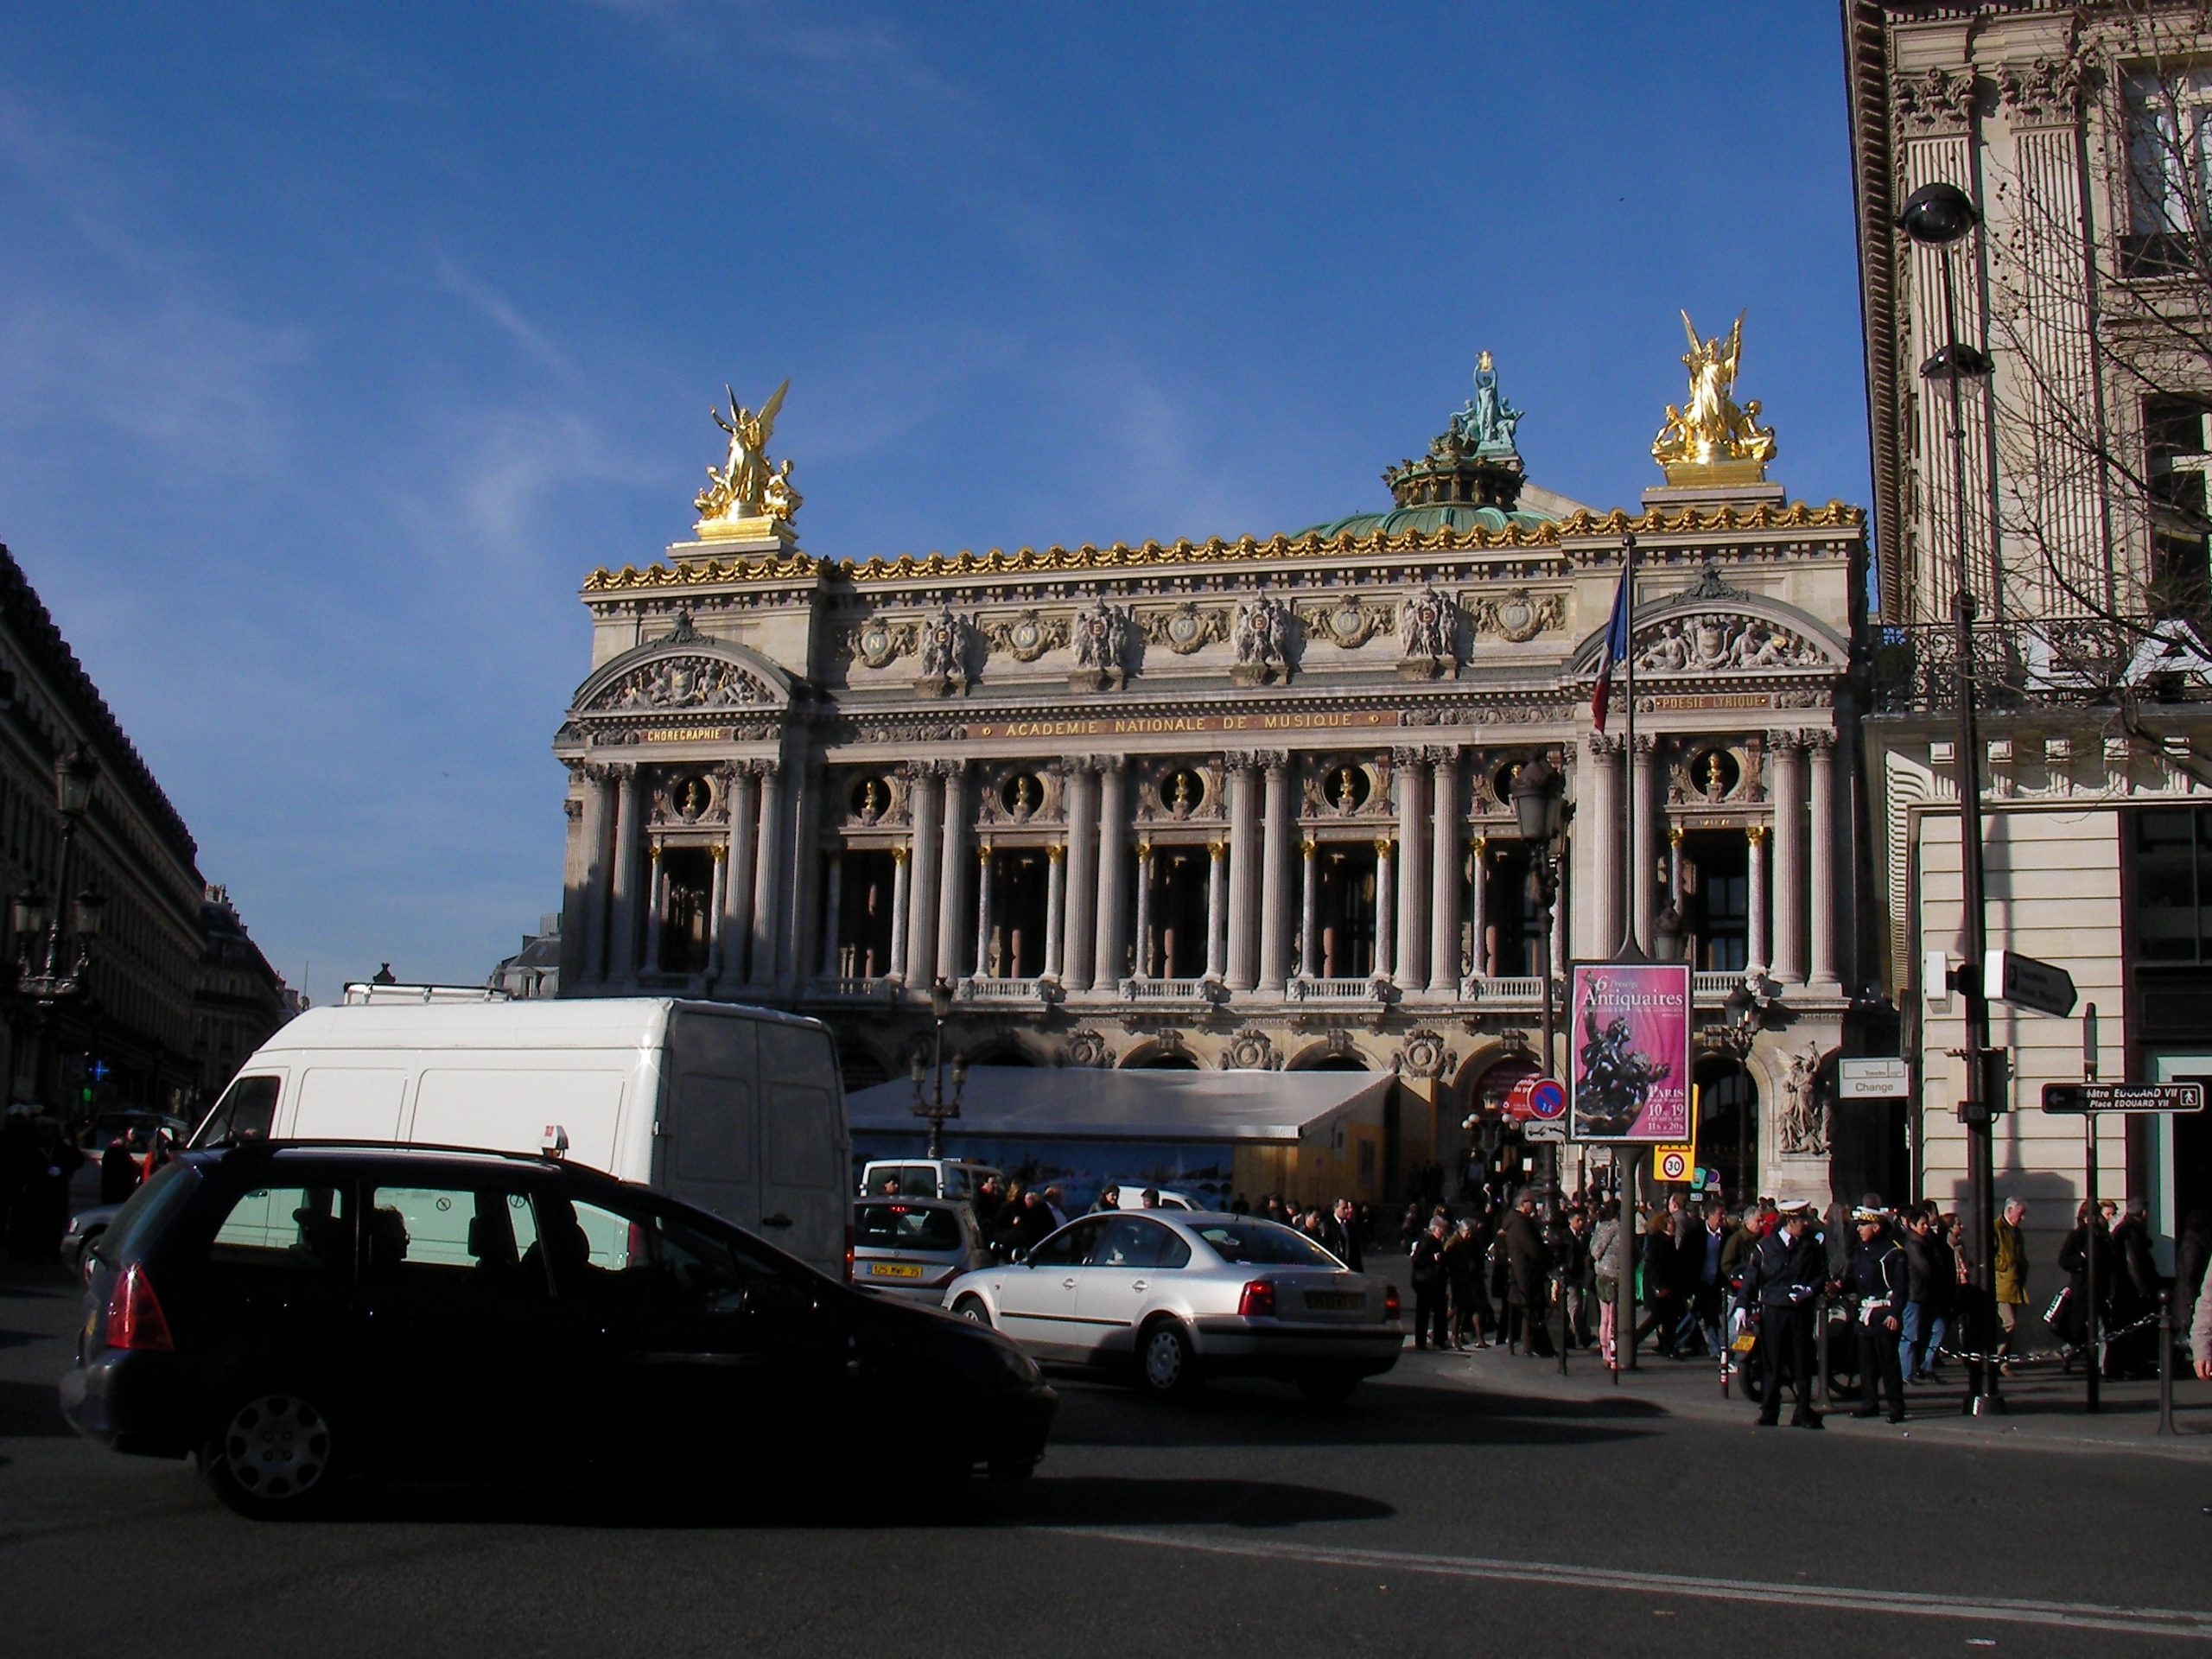 SANY0172 scaled - パリの街を走る観光バス